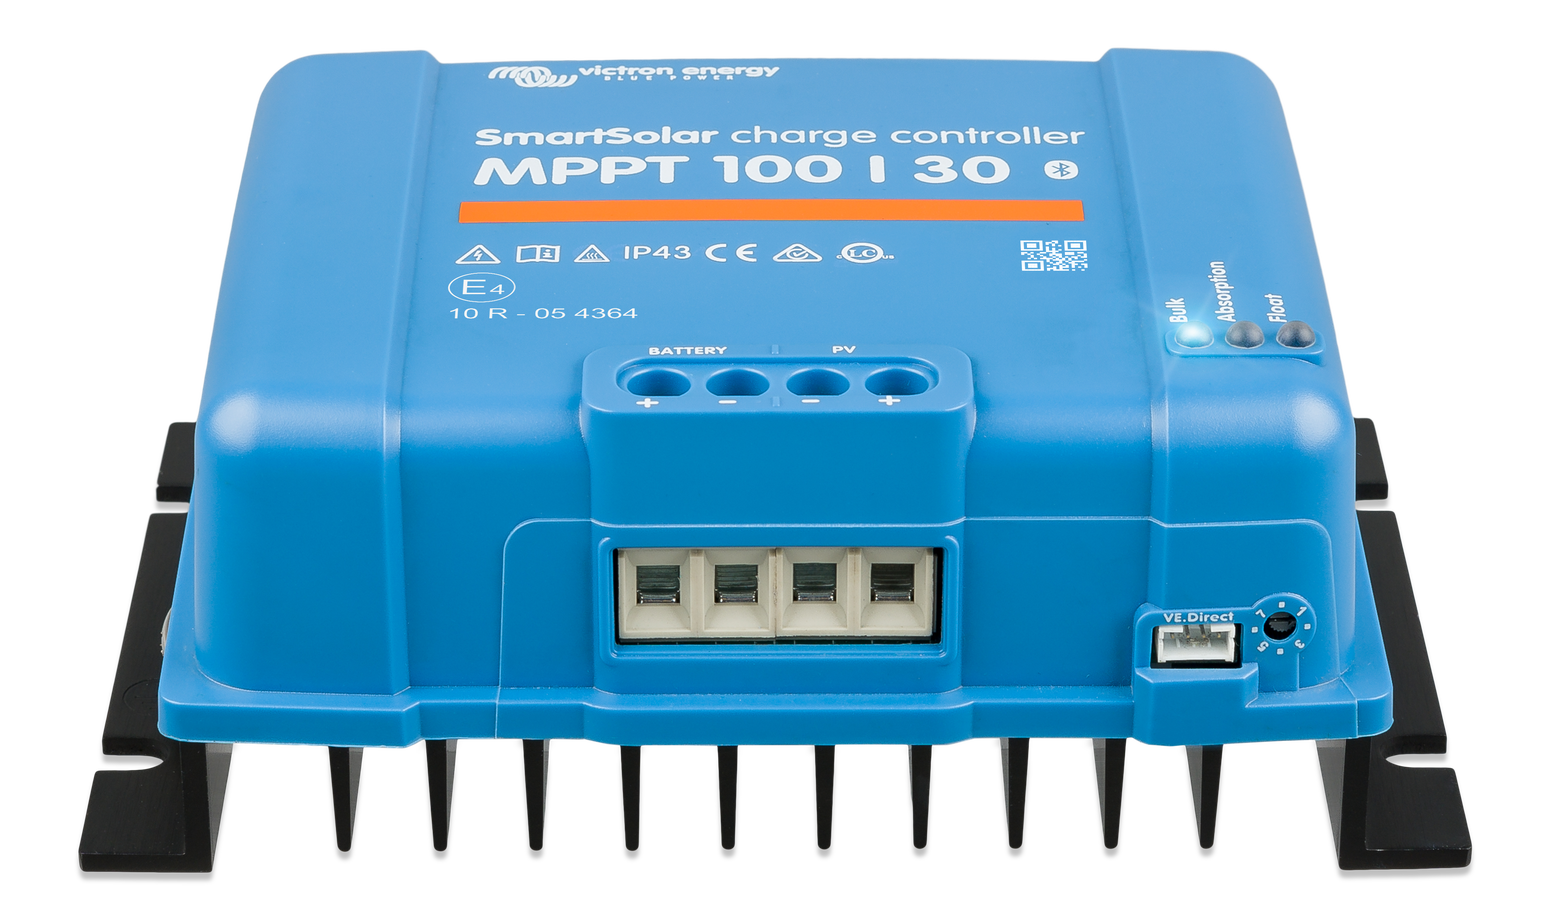 Victron SmartSolar MPPT 100/30 laadregelaar